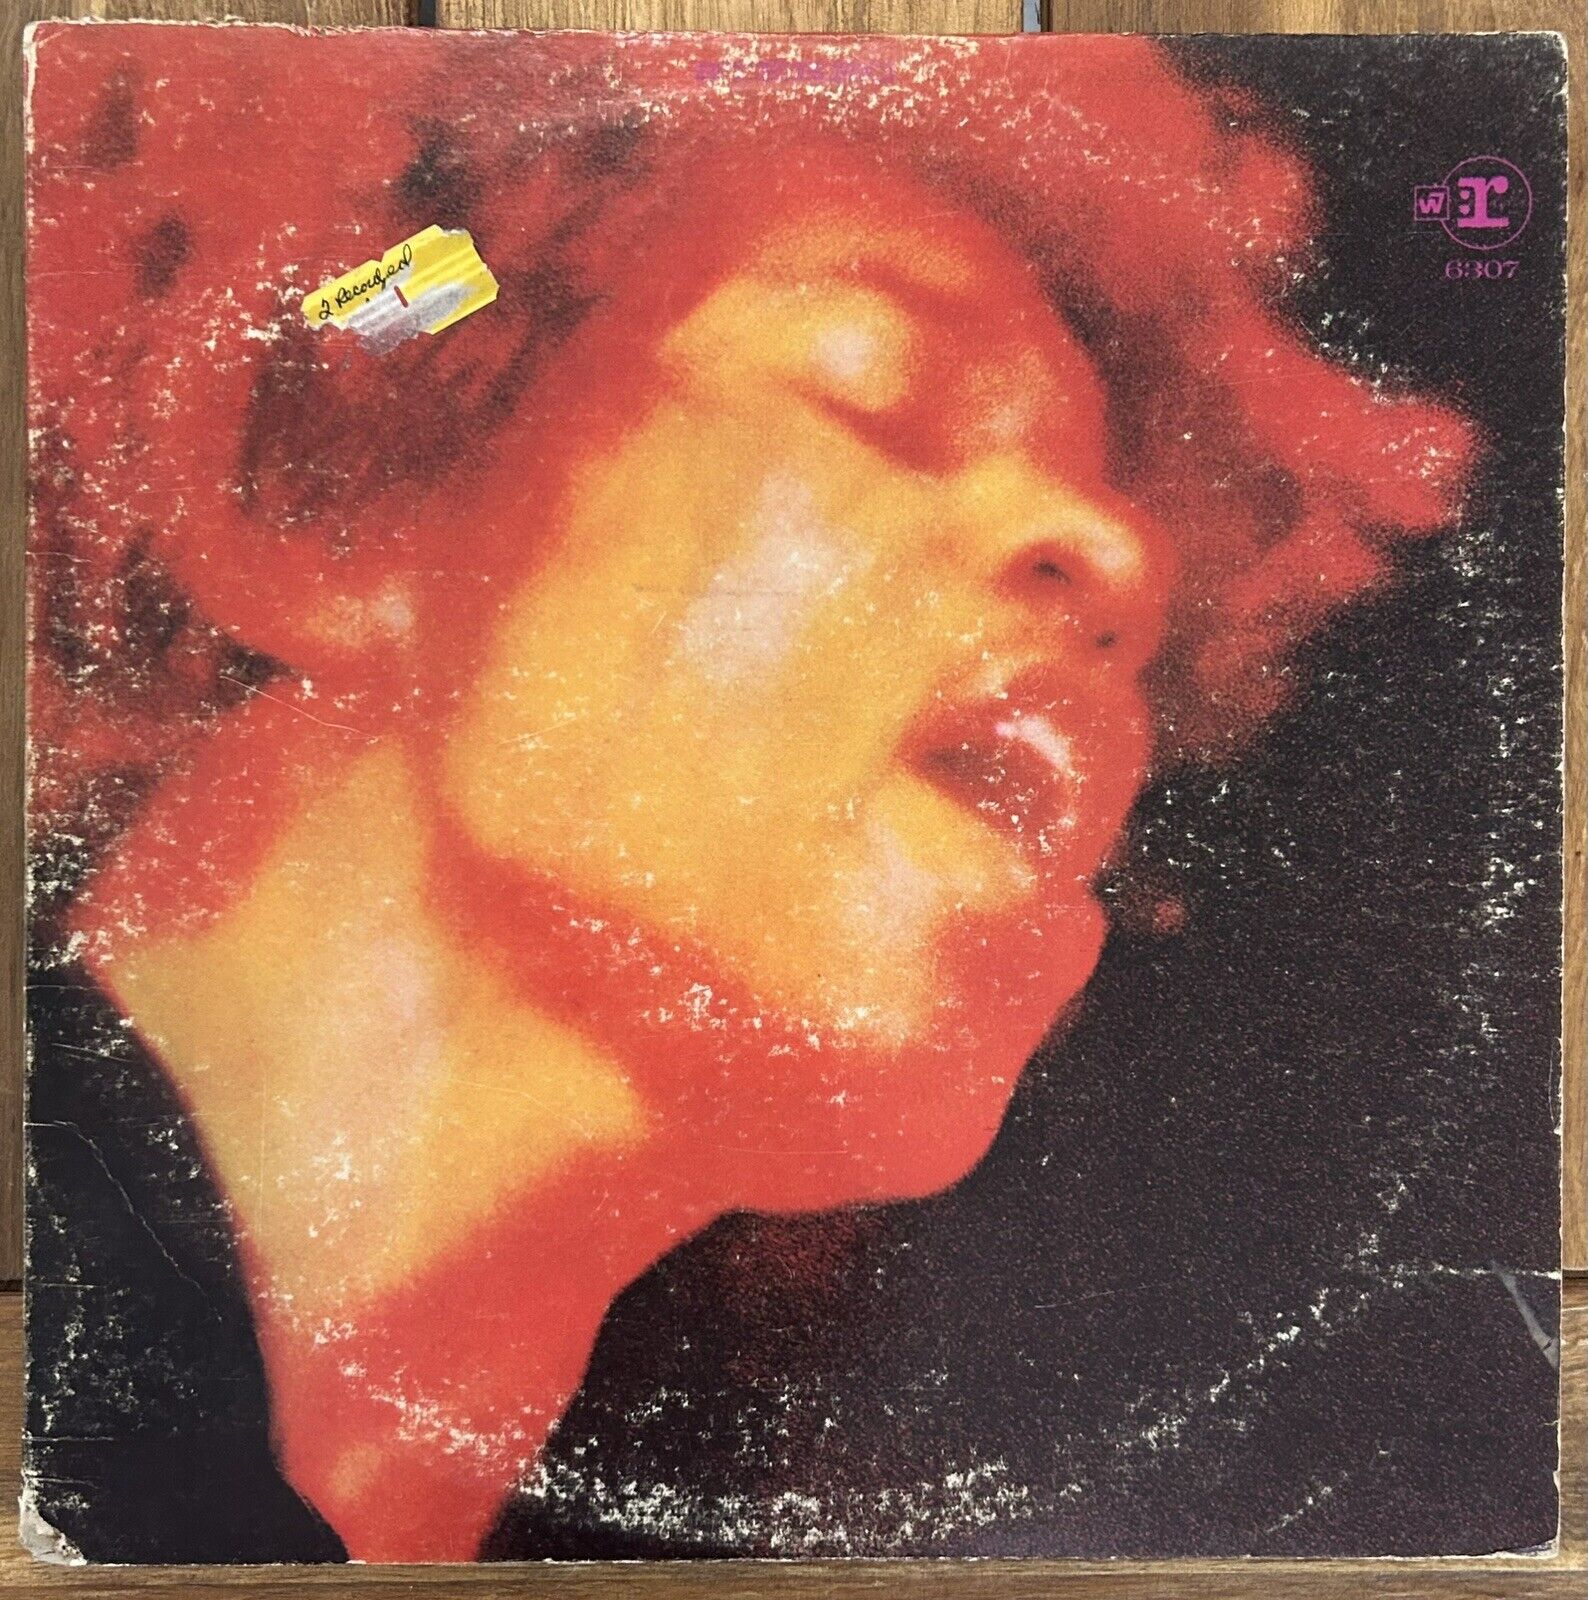 Jimi Hendrix - Electric Ladyland - 1968 Reprise 2-Tone Labels RS 6307 2LP Vinyl